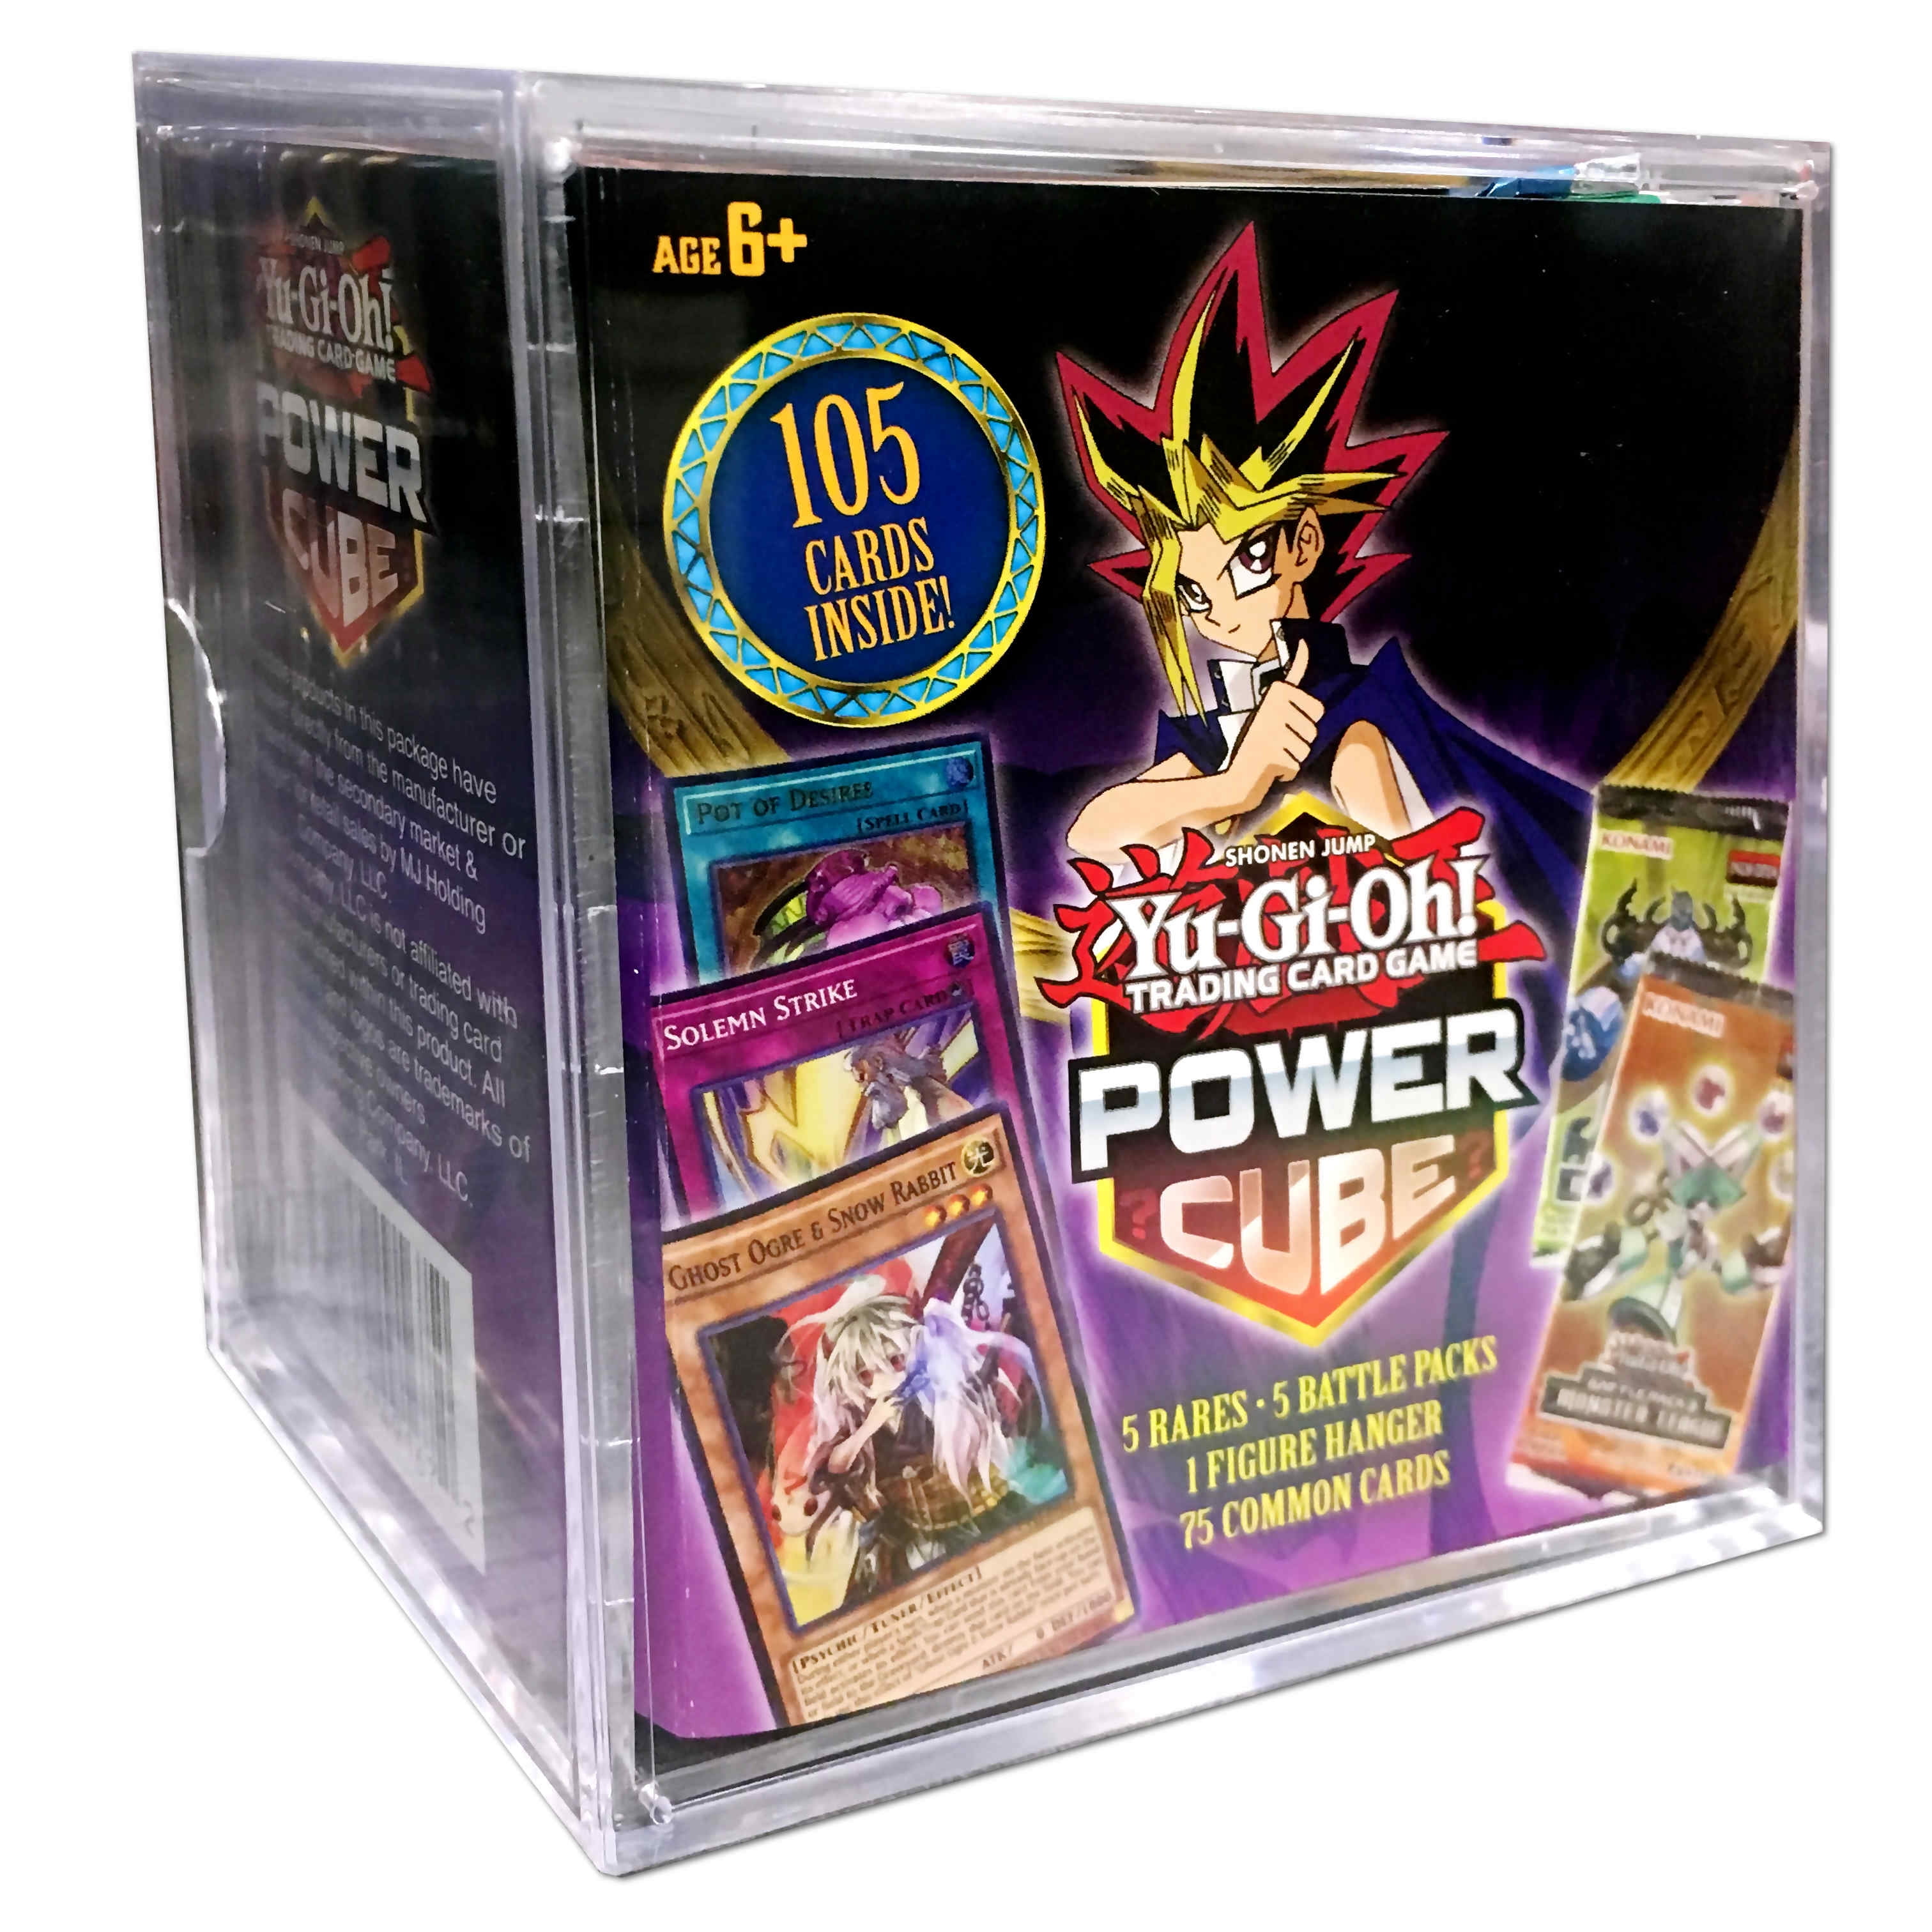 Topps - Yu-Gi-Oh! Trading Card Game Power Cube 5 Rares - 5 Battle packs ...